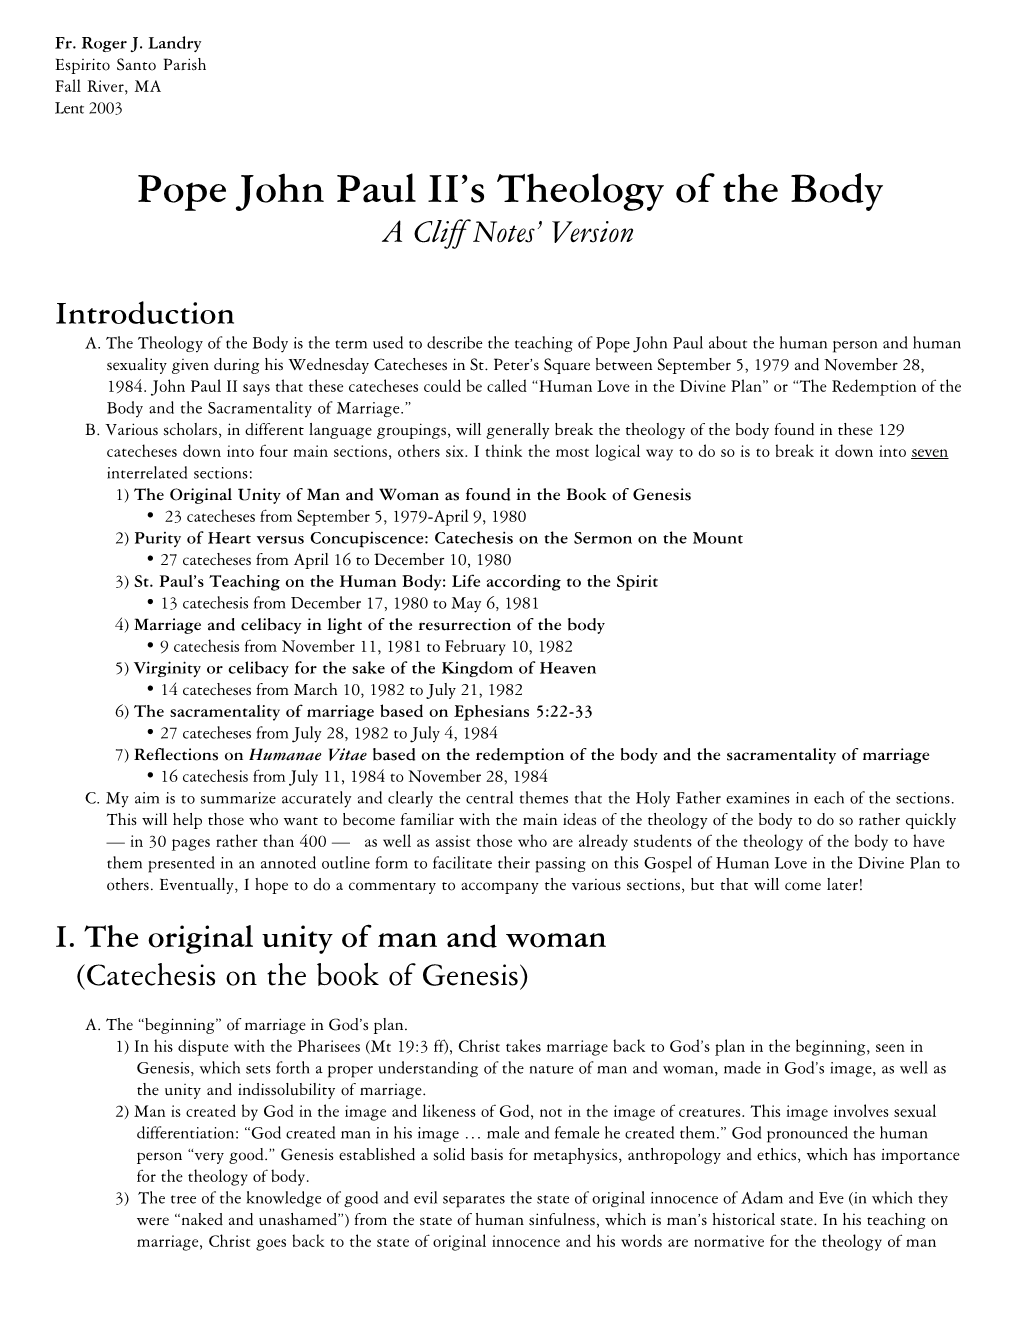 Pope John Paul II's Theology of the Body